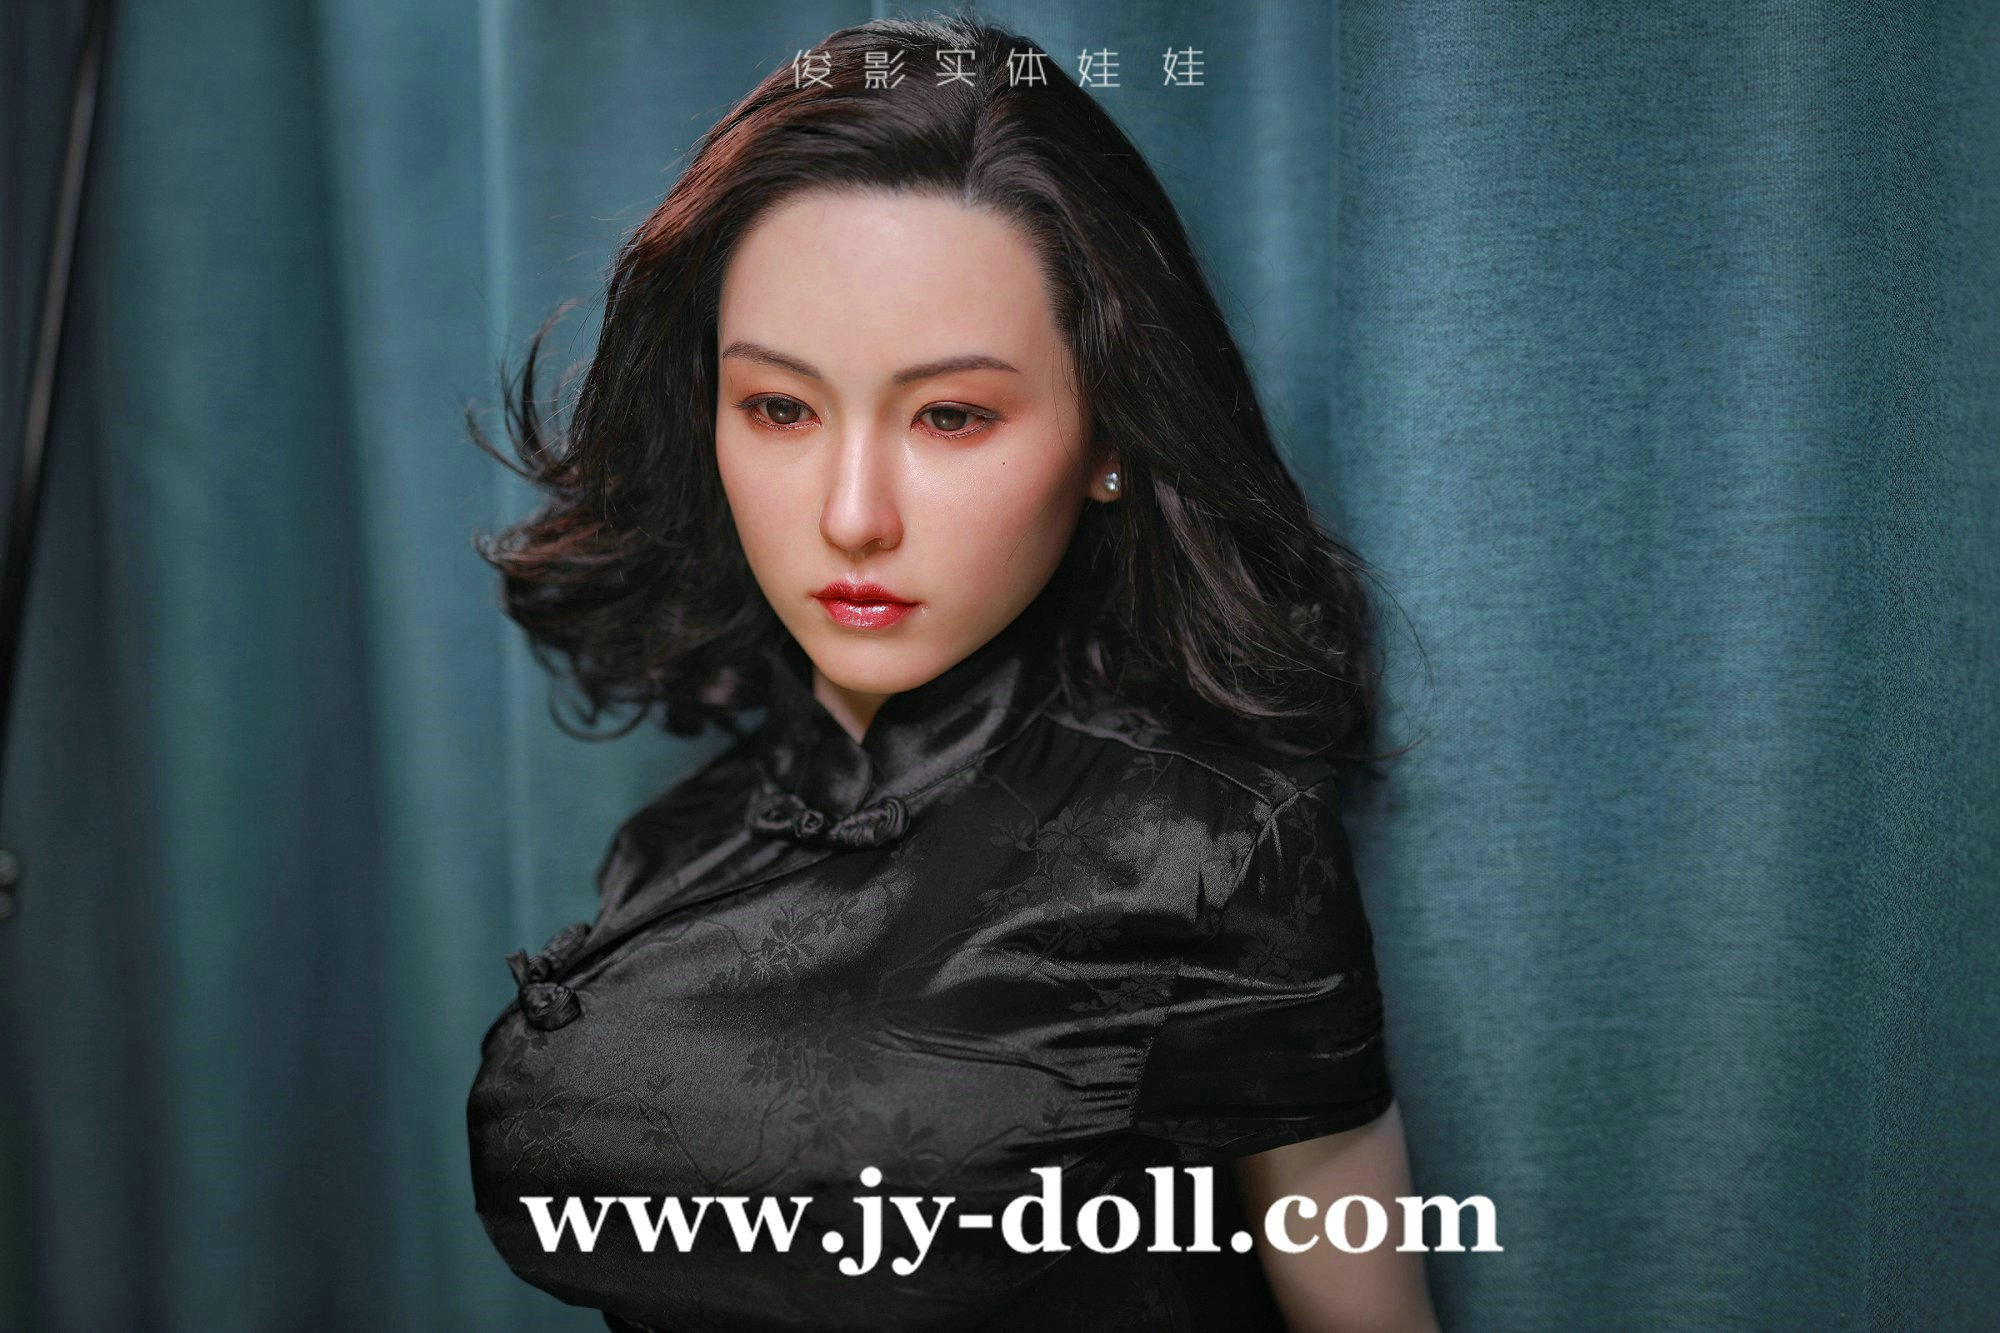 JY Doll 163cm life size full silicone doll Lian